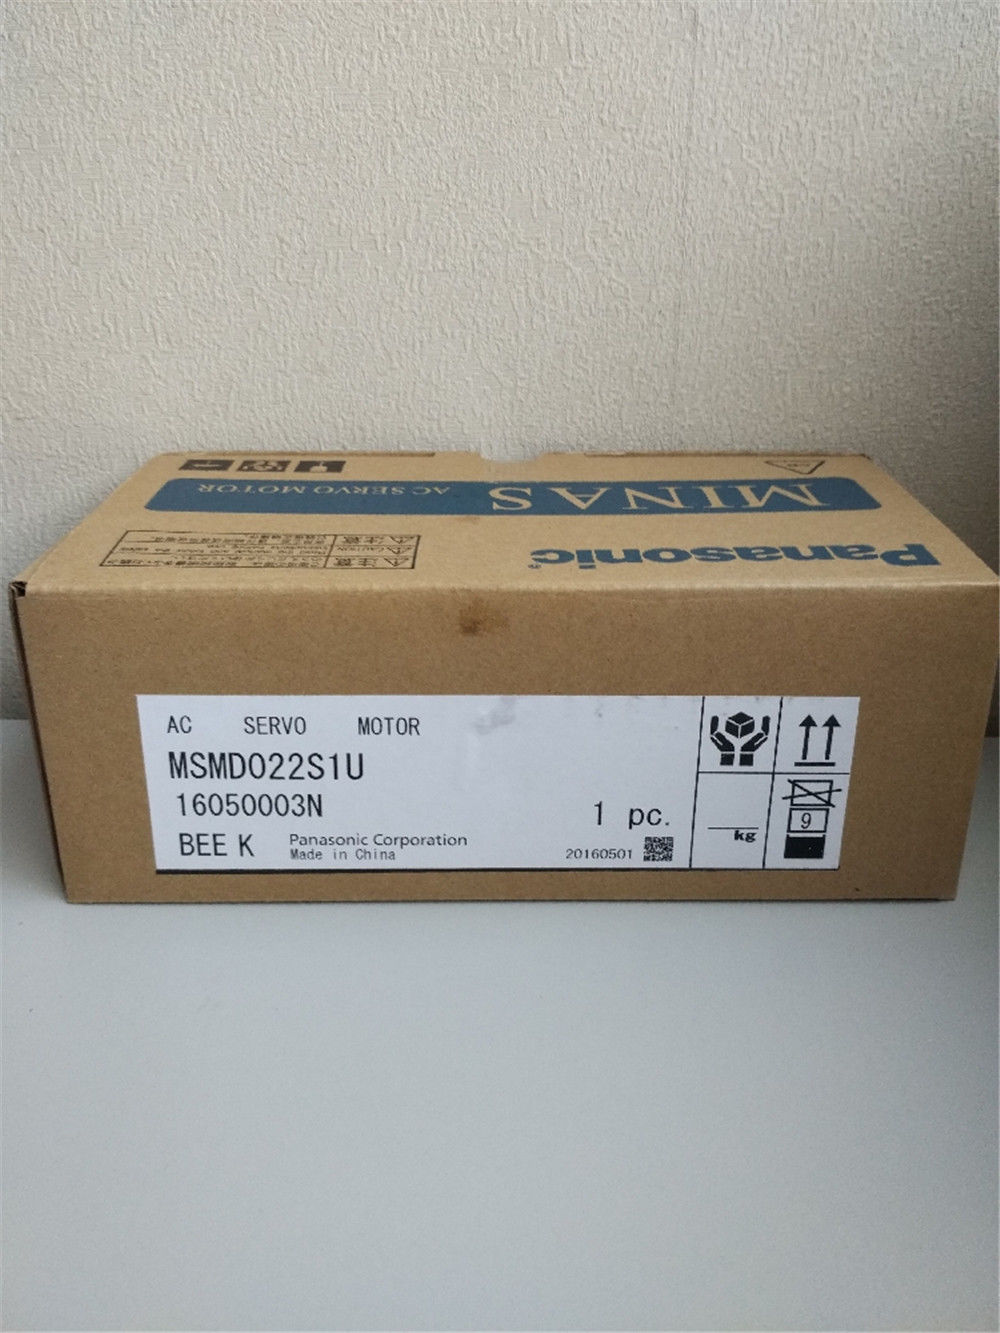 Brand NEW PANASONIC AC Servo motor MSMD022S1U in box